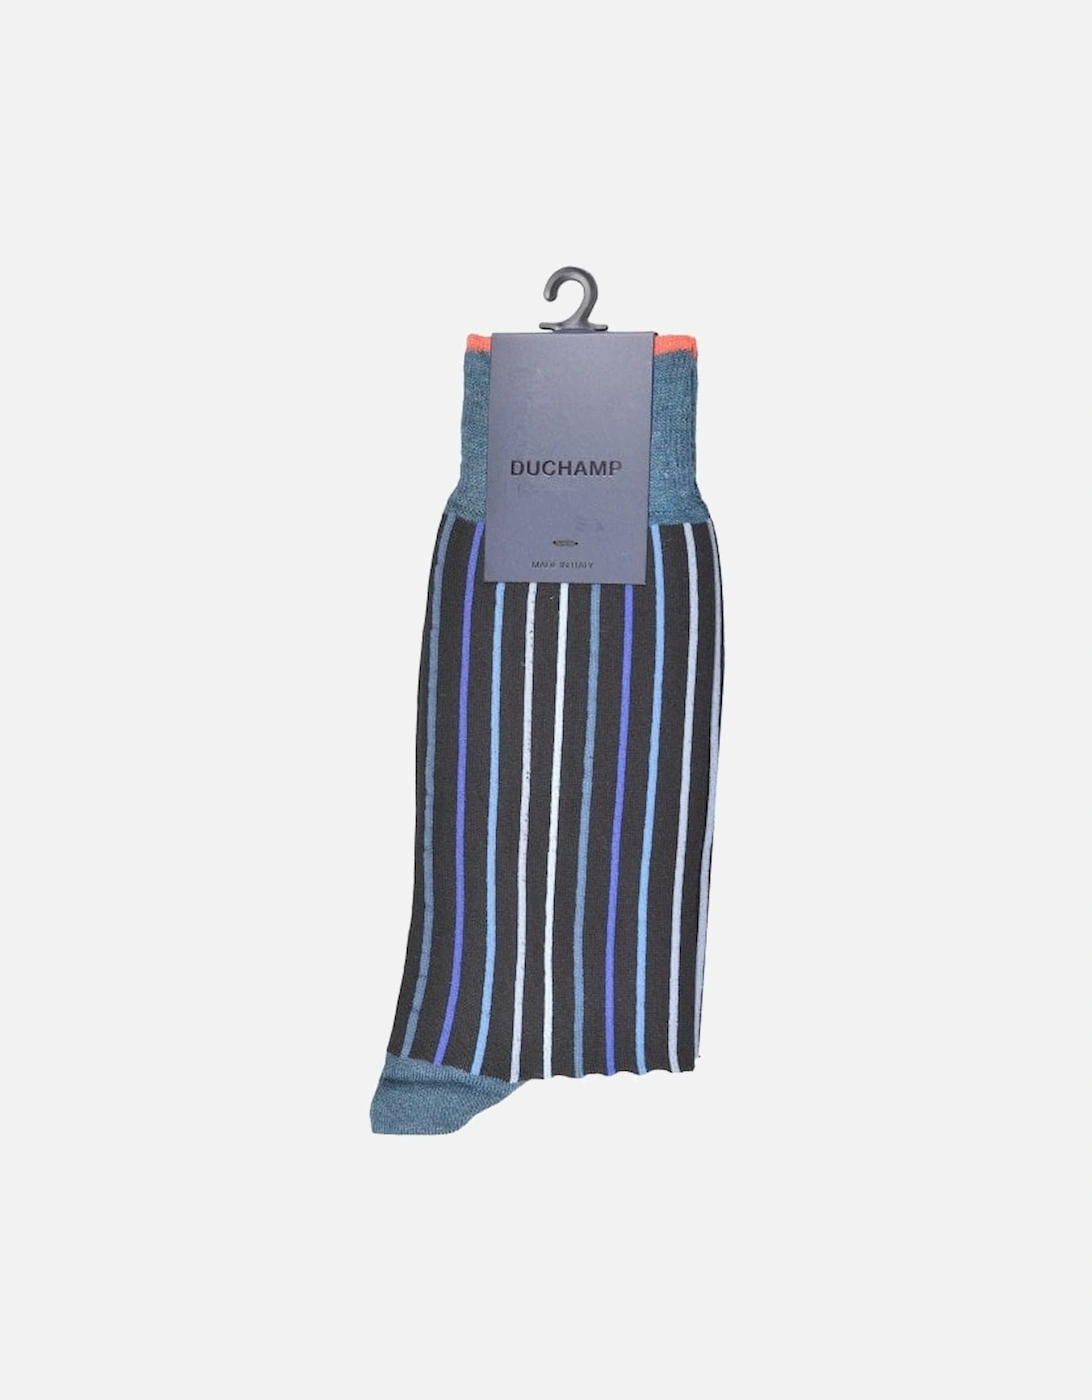 Vertical Stripe Bamboo Socks, Black/Blue